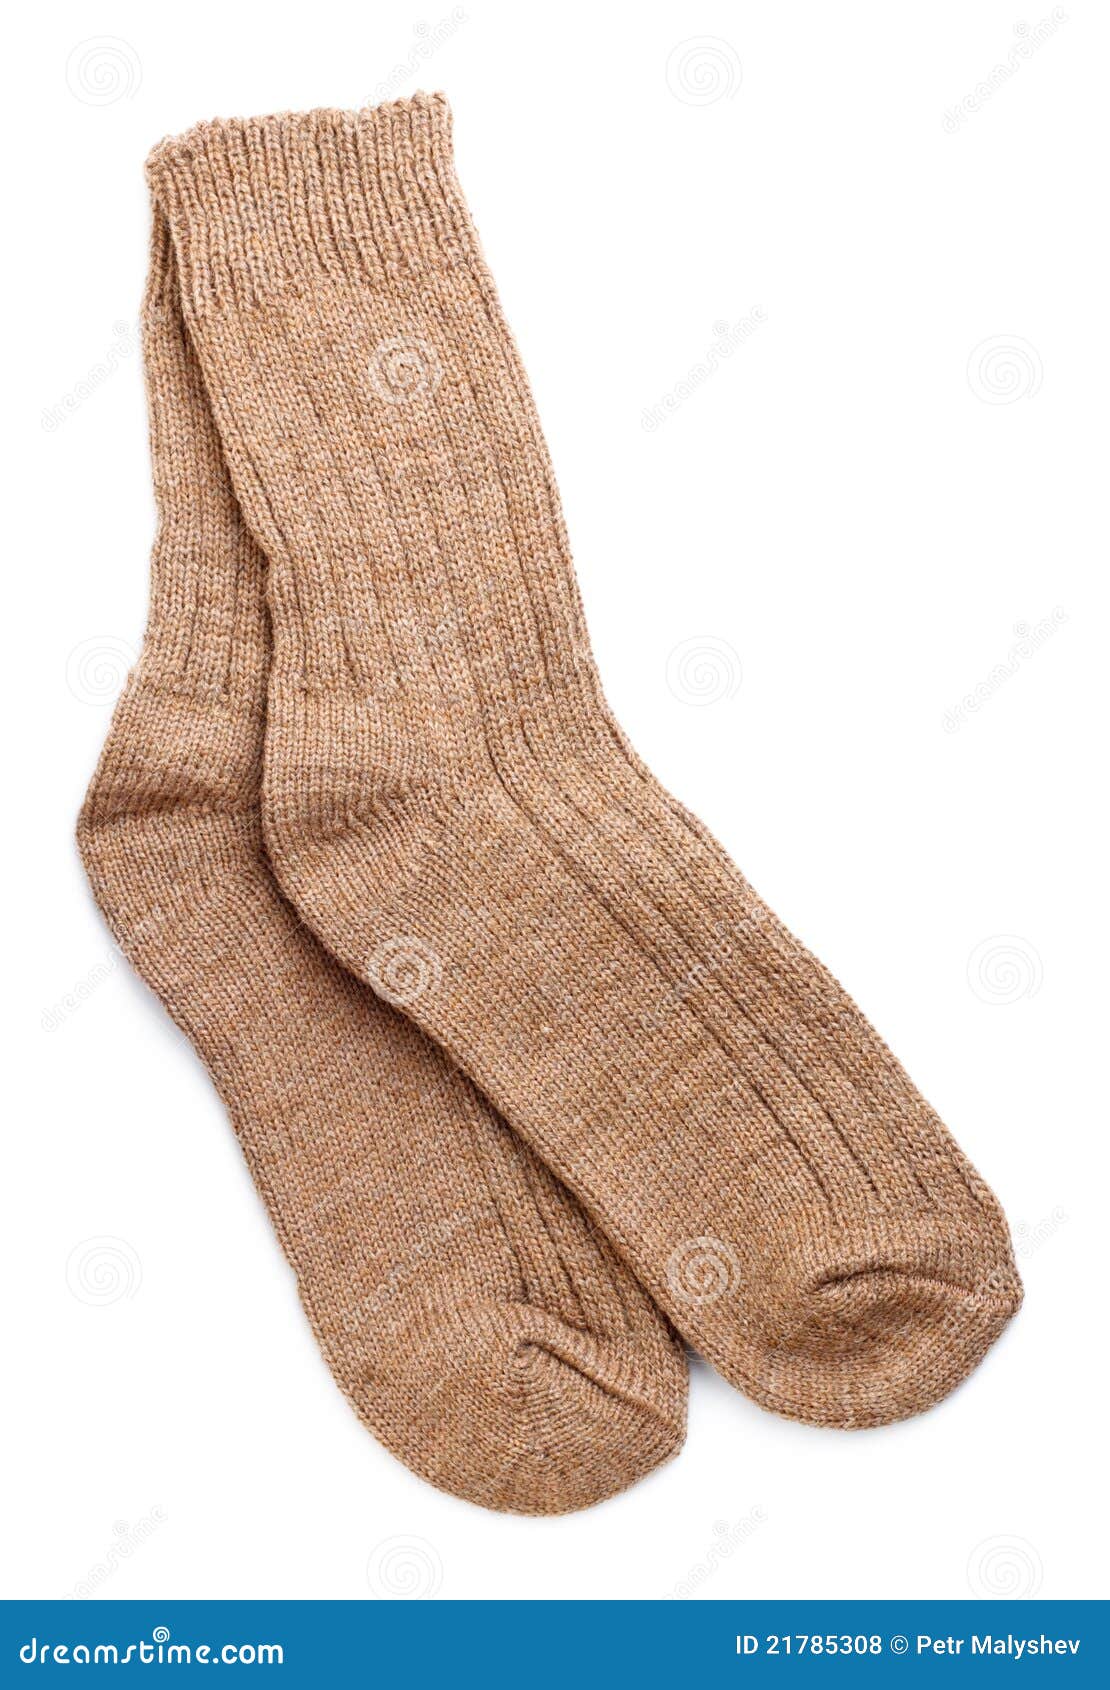 Woollen Socks stock photo. Image of sock, pair, grey - 21785308